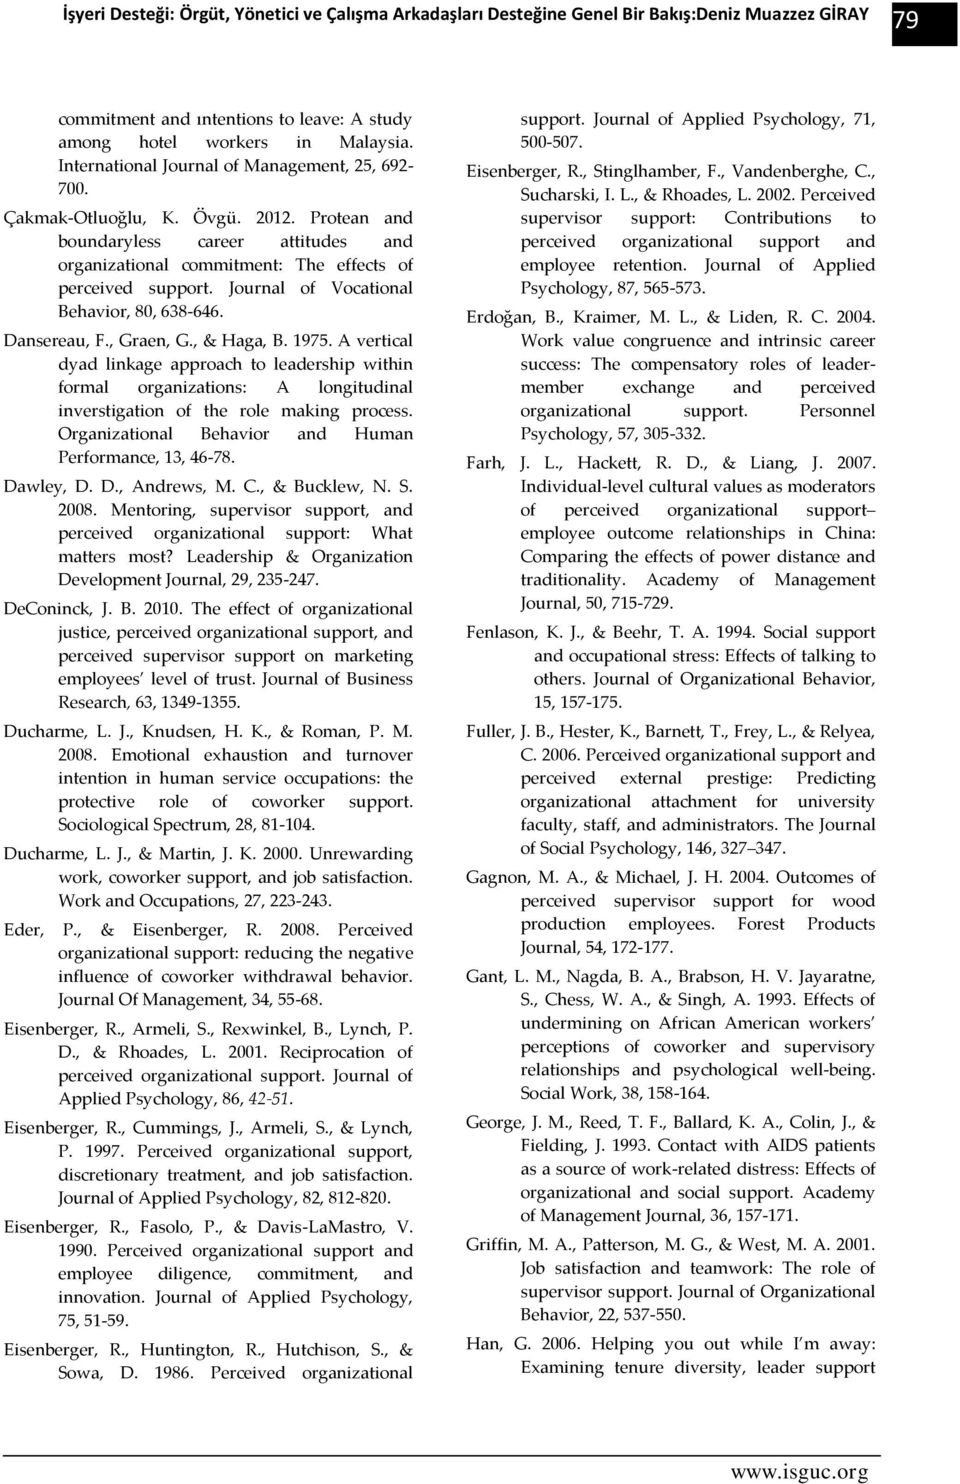 Journal of Vocational Behavior, 80, 638-646. Dansereau, F., Graen, G., & Haga, B. 1975.